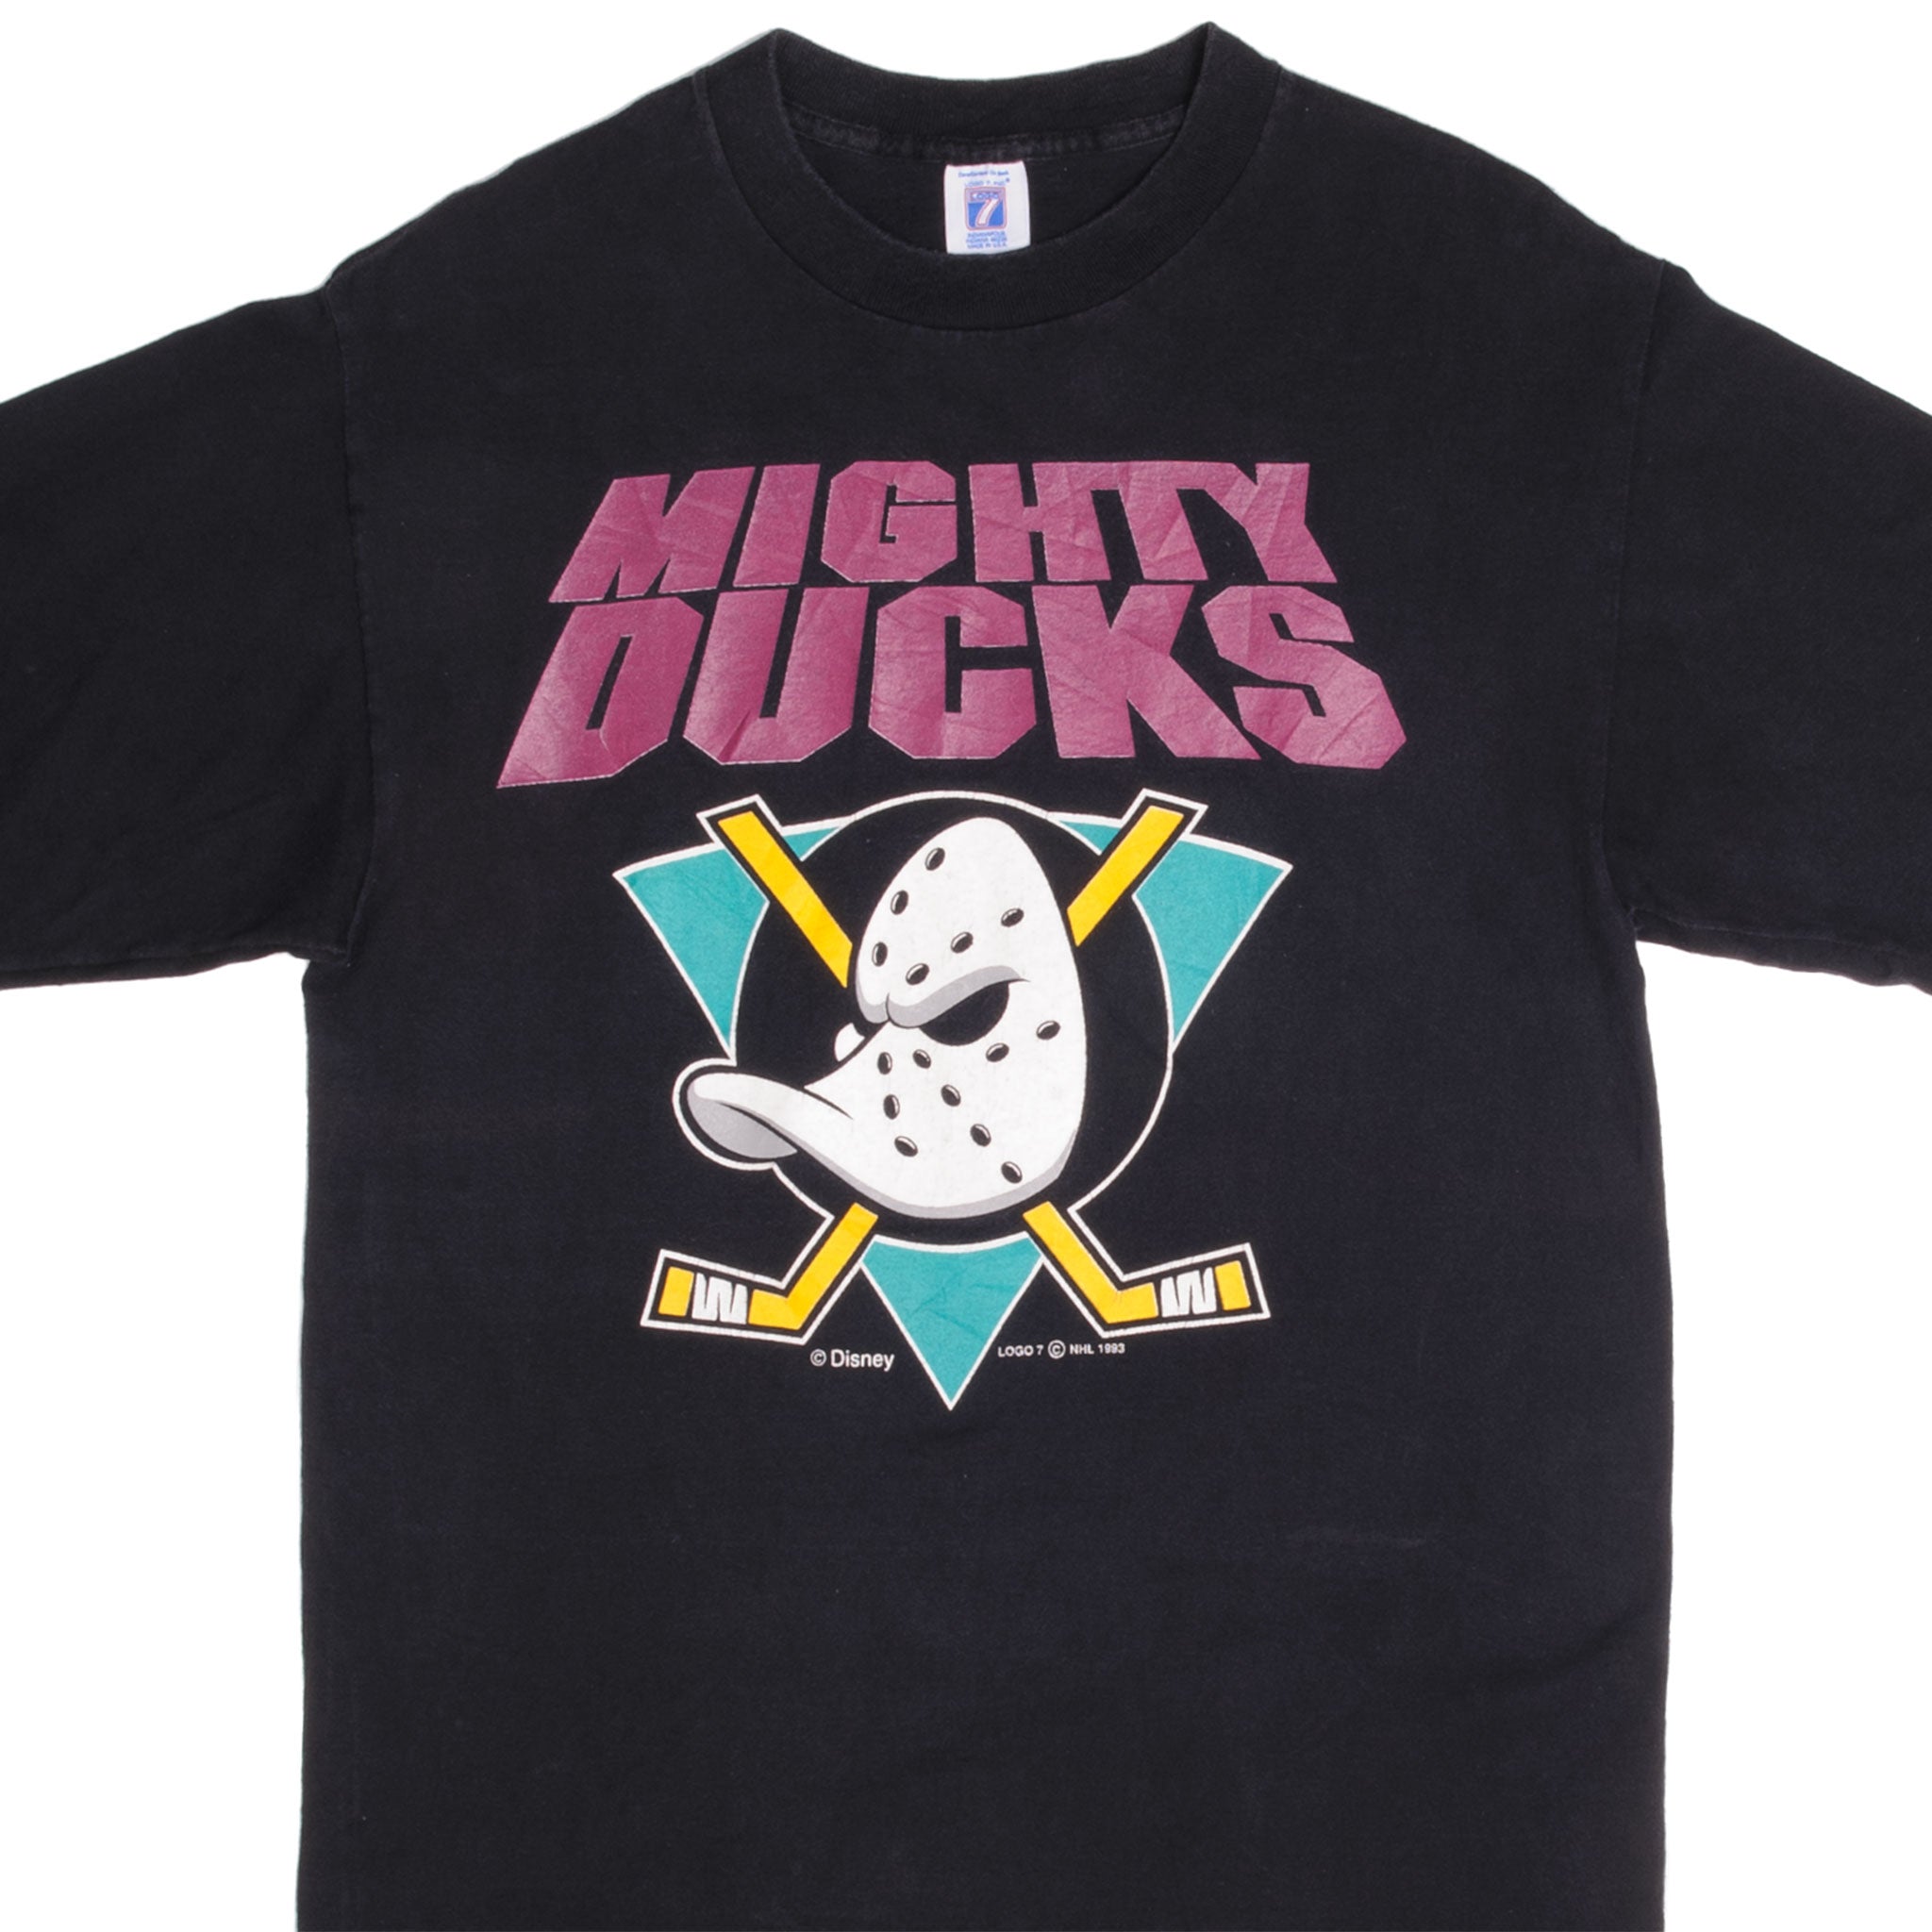 Vintage NHL Mighty Ducks Shirt - Anaheim Ducks Unisex T-Shirt